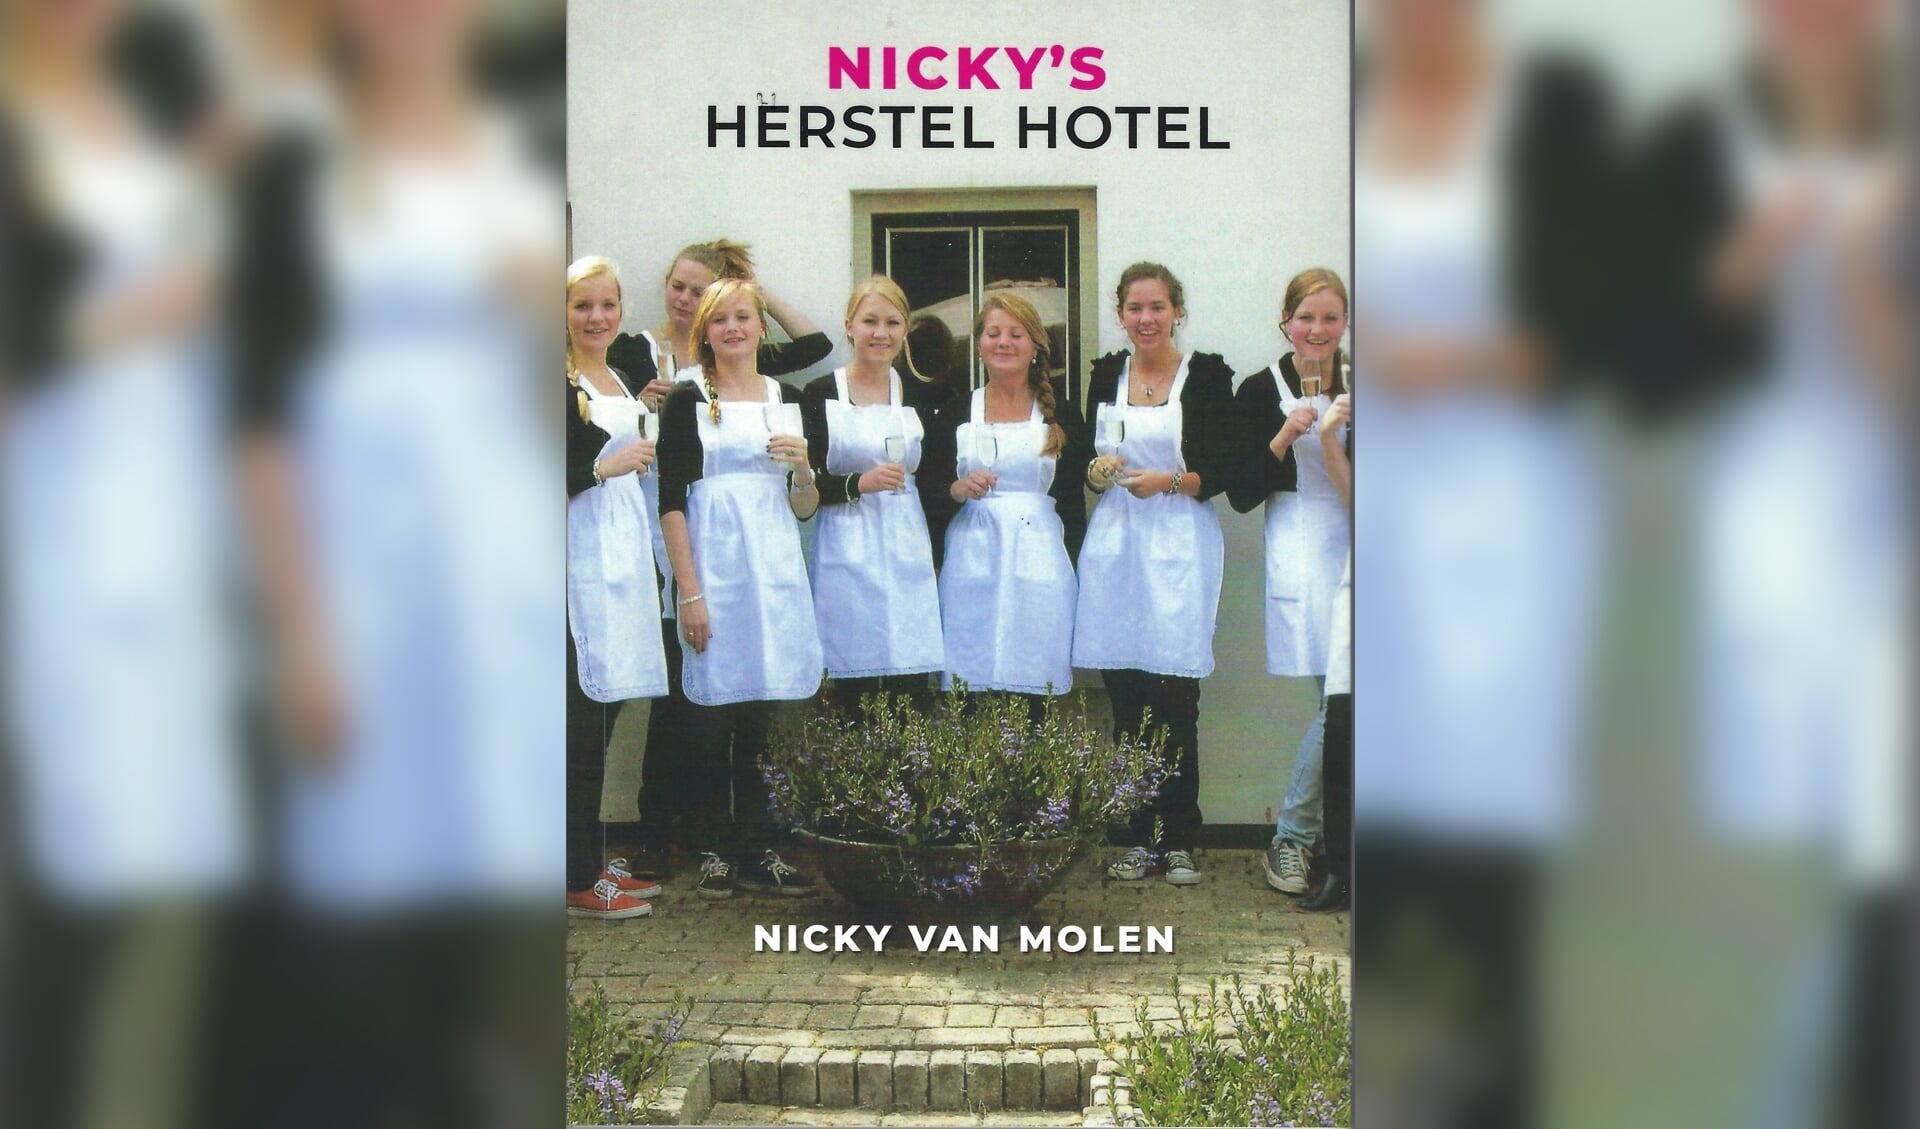 Nicky's Herstel Hotel